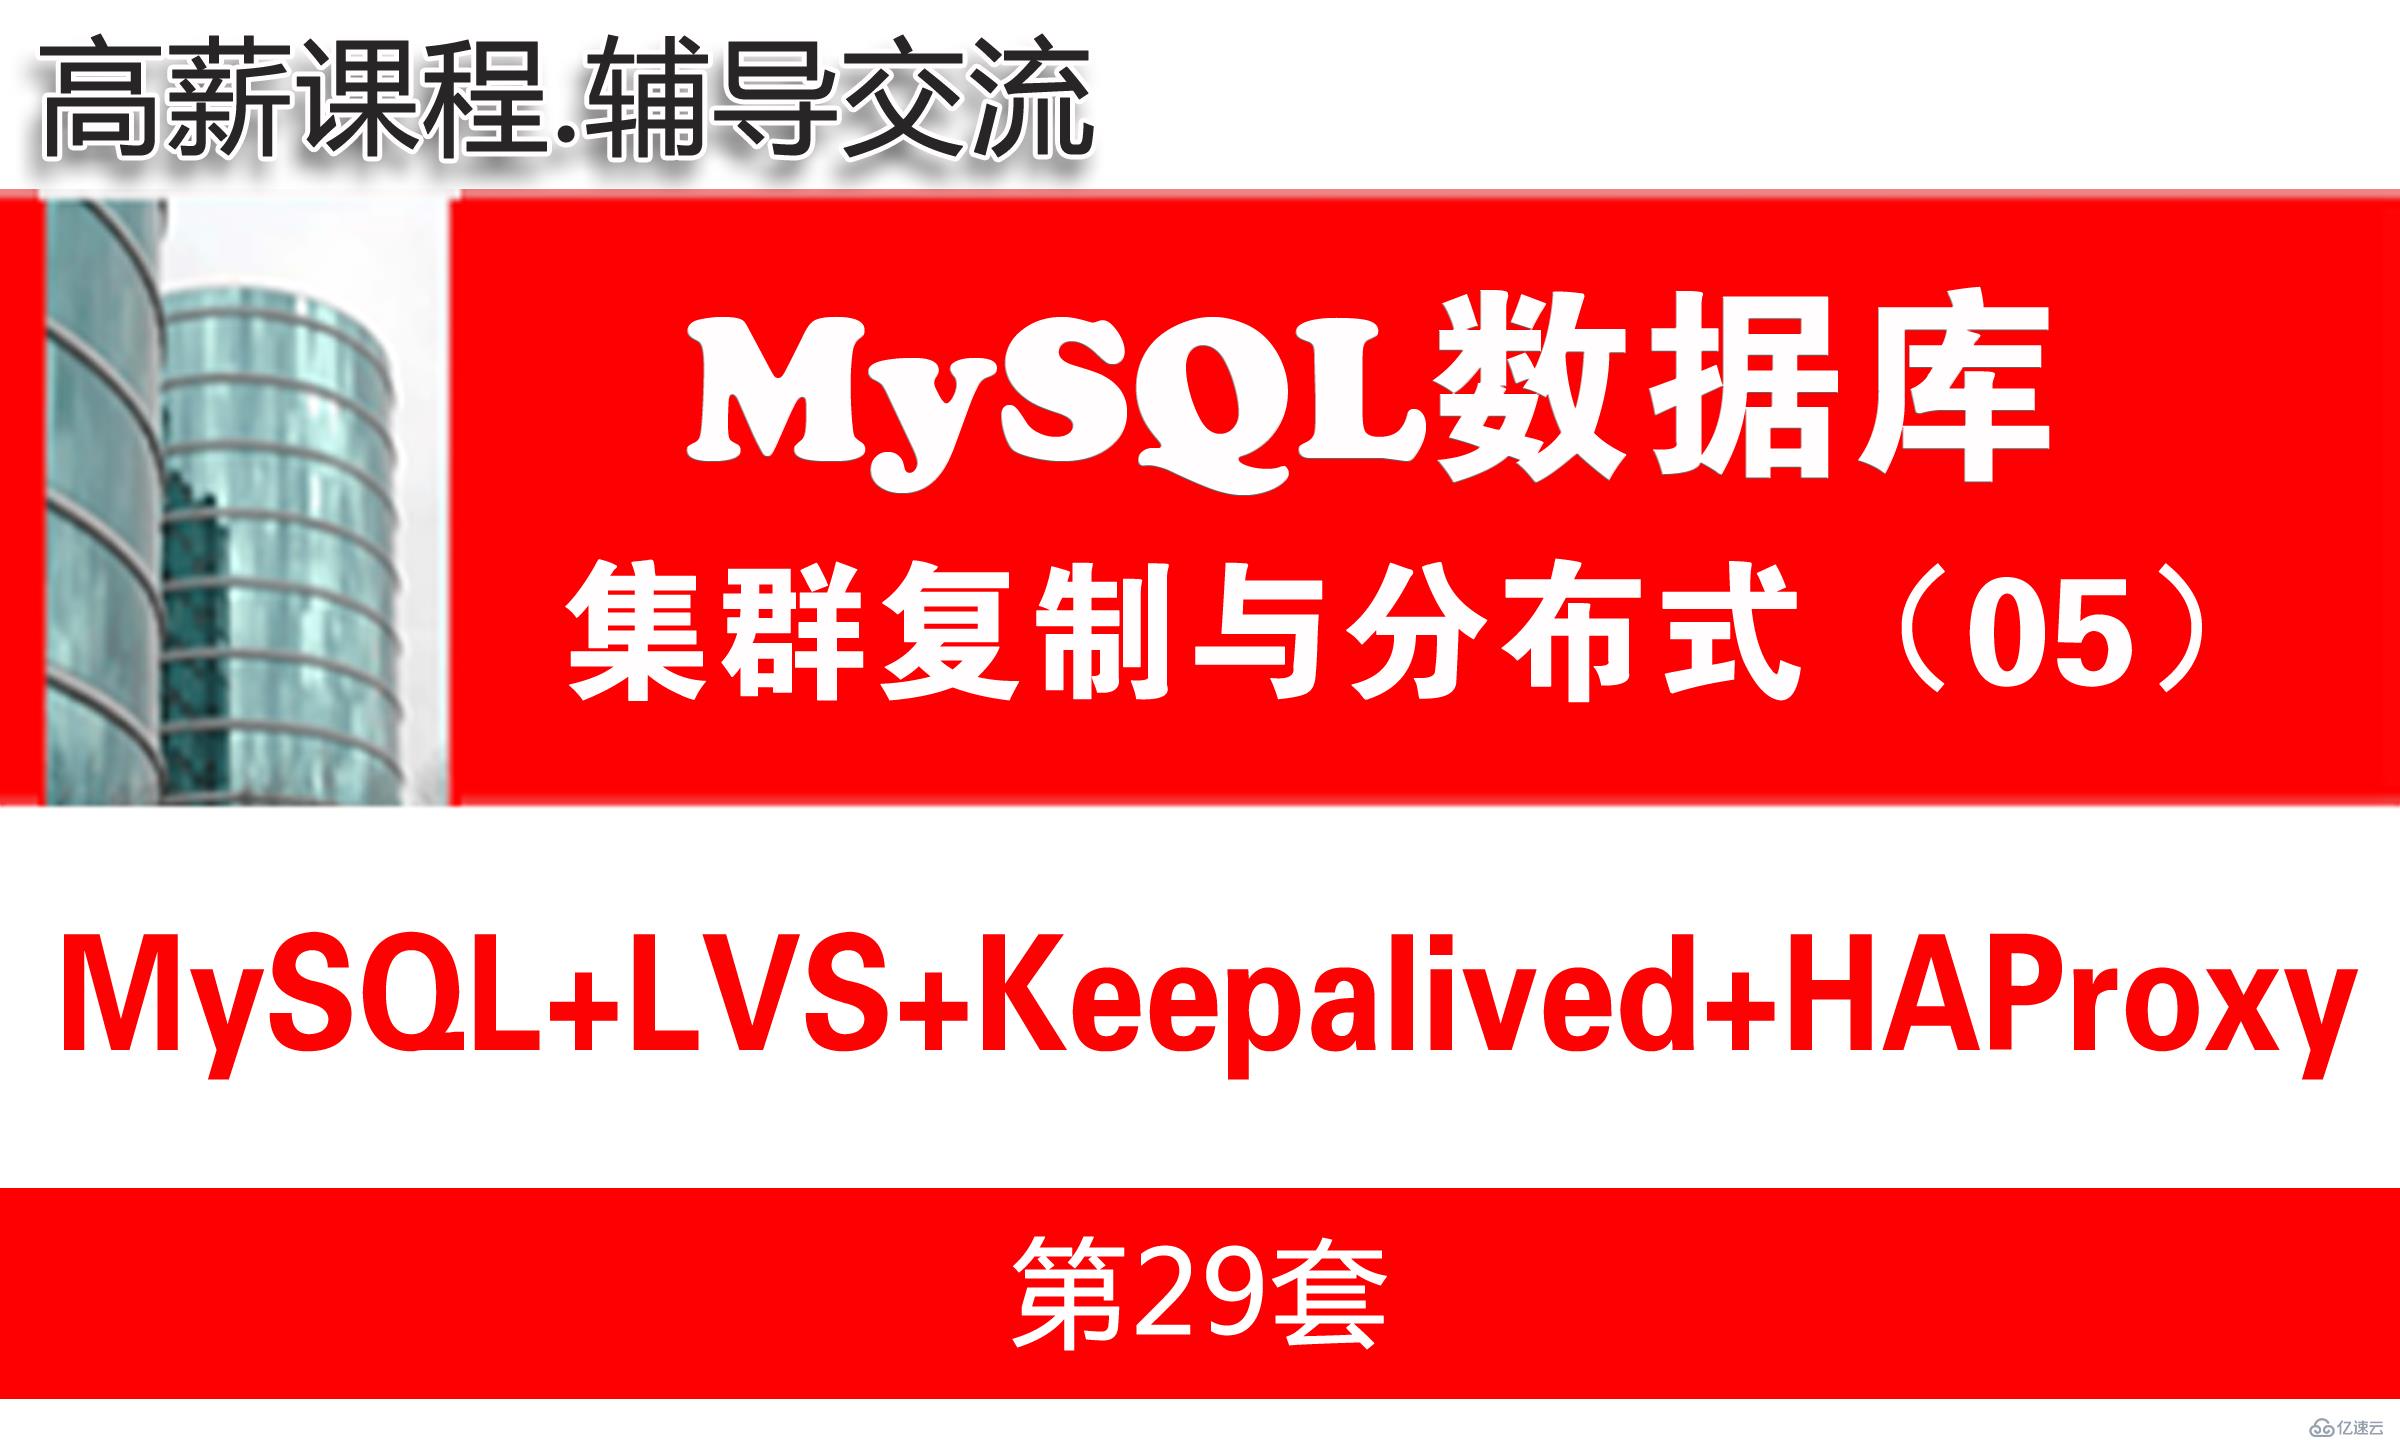 MySQL(LVS+Keepalived+HAProxy)_MySQL高可用复制与分布式集群架构05